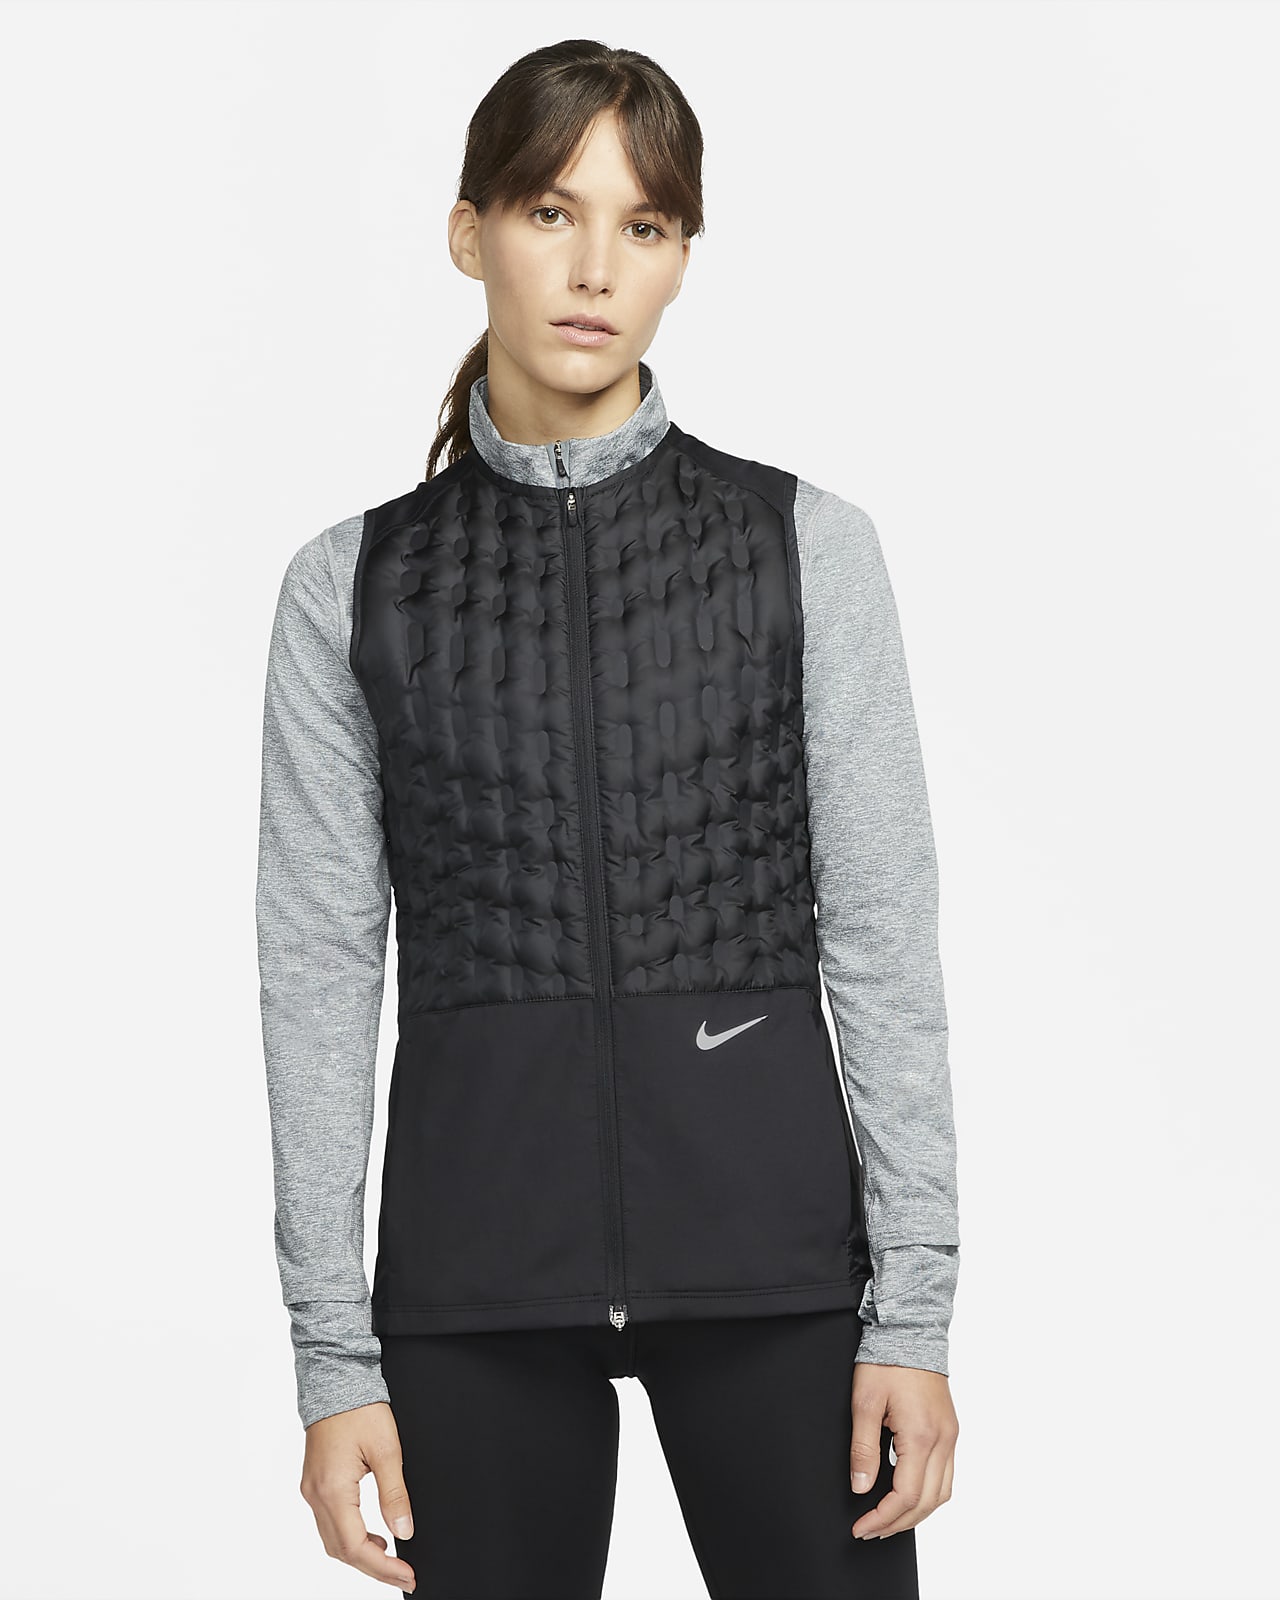 Nike therma fit womens jacket - munimoro.gob.pe